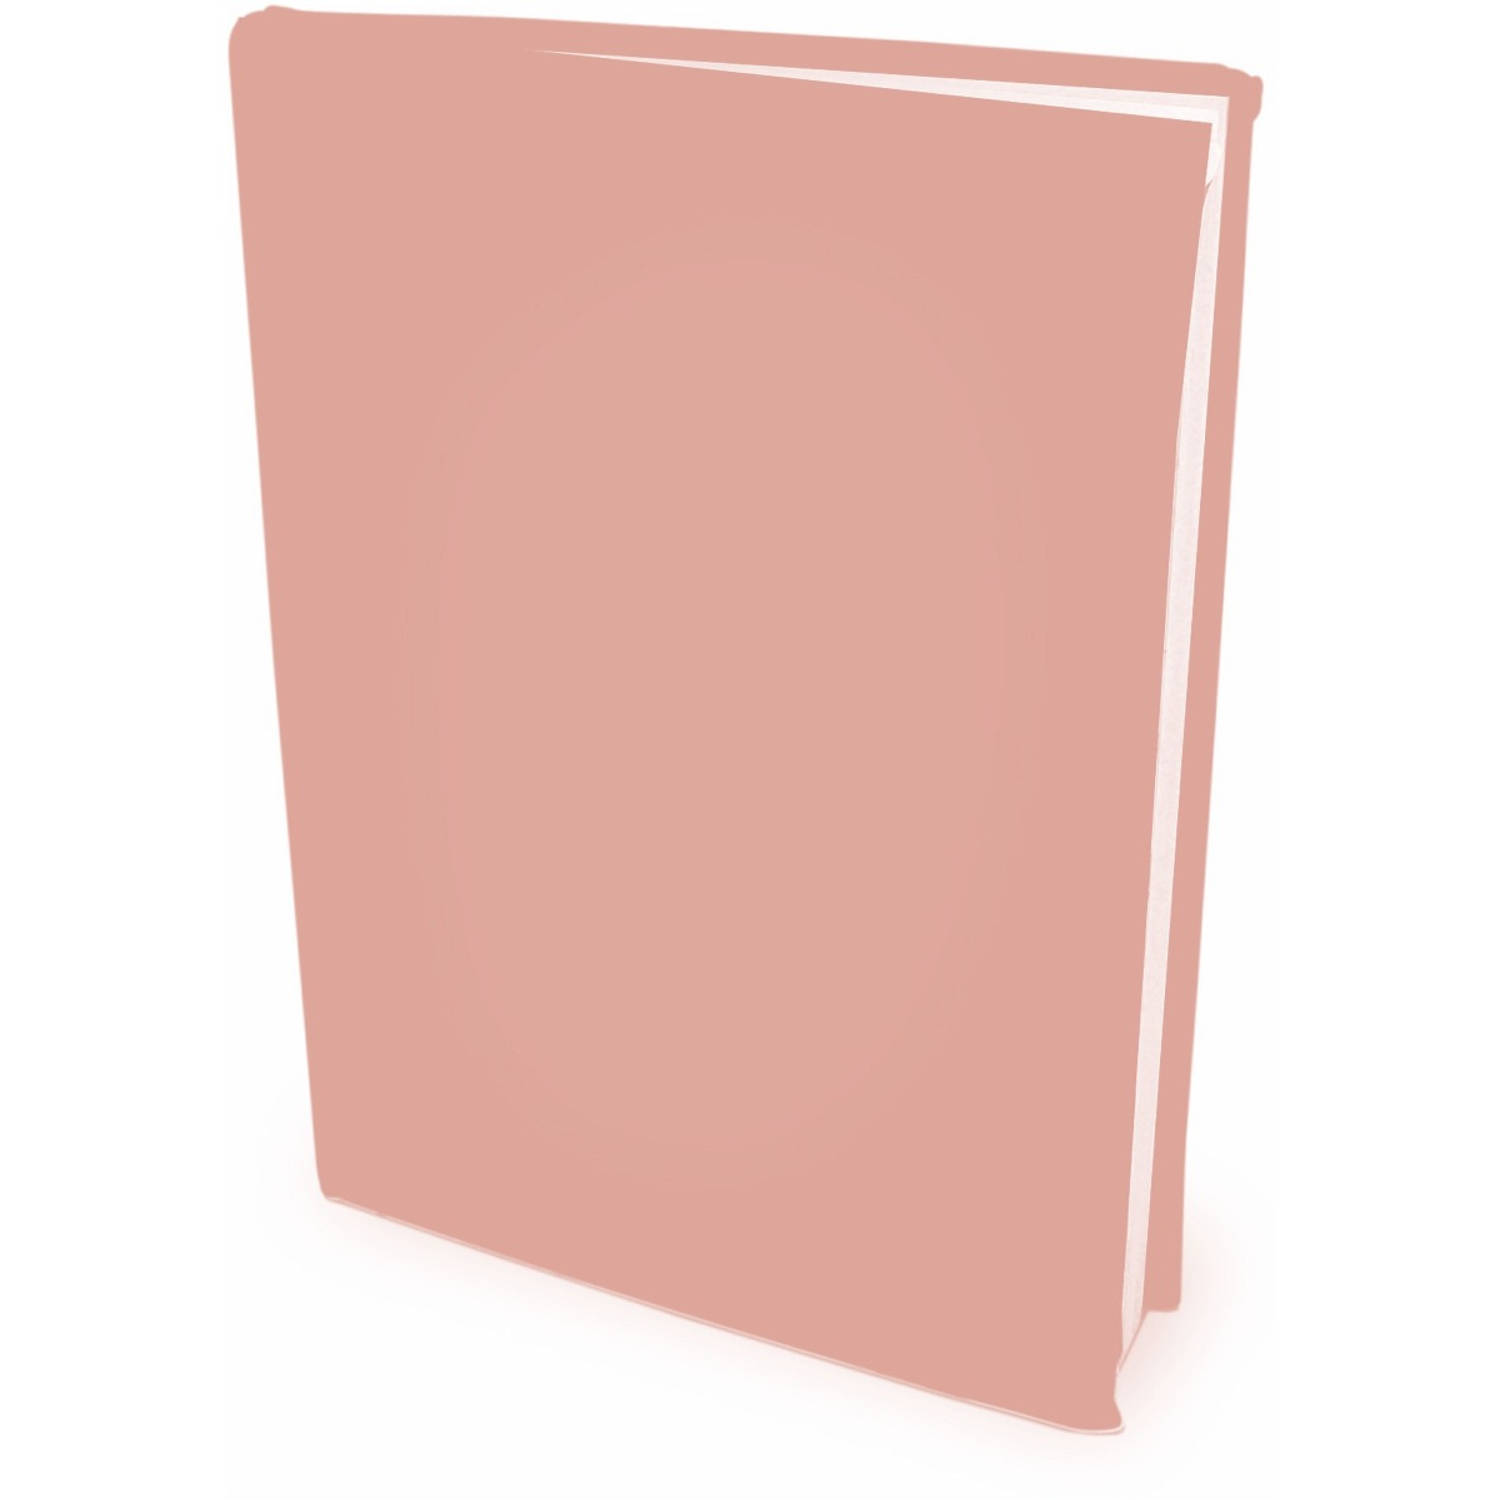 Benza Rekbare Boekenkaften - Licht - A4 - 1 Stuks - Roze